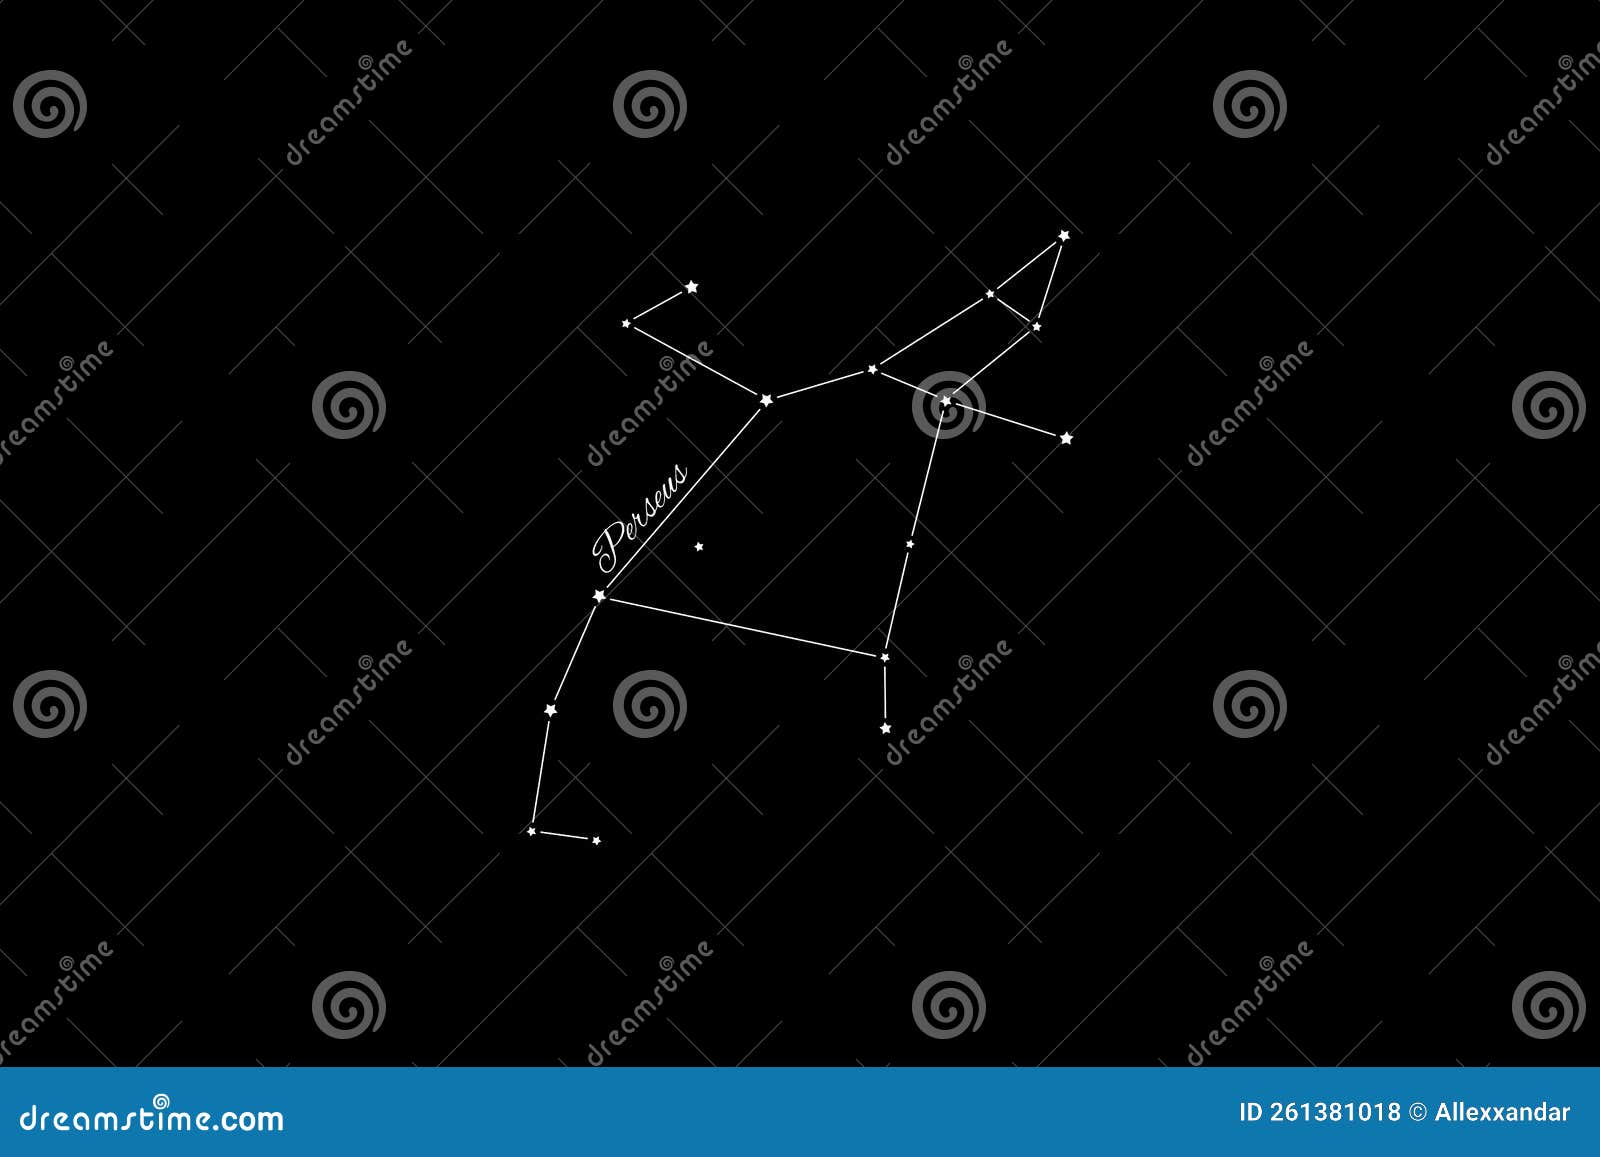 perseus constellation, cluster of stars, hero constellation